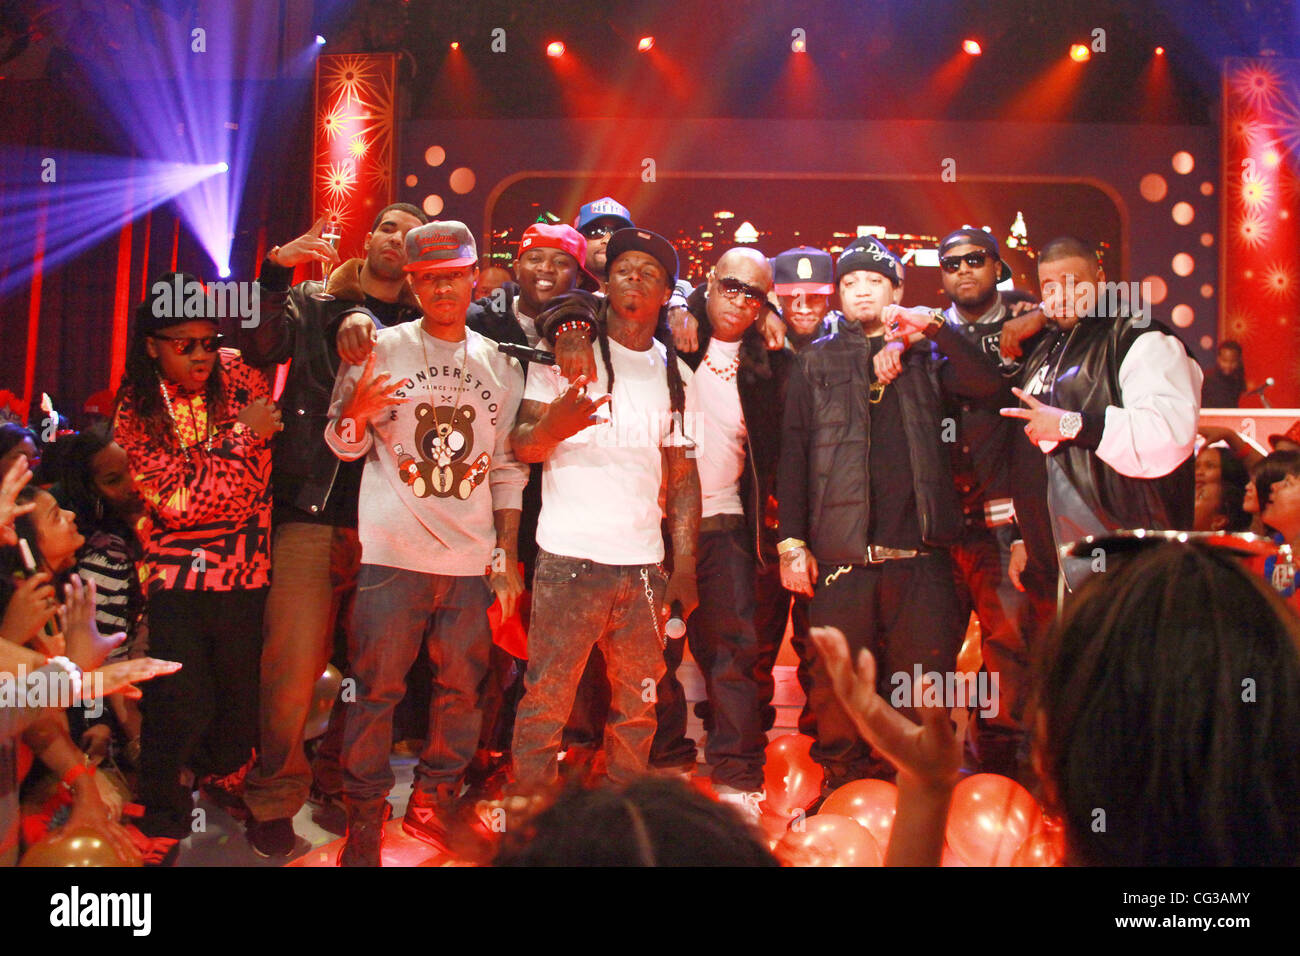 Cory Gunz, Lil Twist, Gudda Gudda, Nicki Minaj, Jae Millz, Lil Chuckee, Bird Man, Bow Wow, Tyga, Mack Maine  BET's '106 and Park' New Years Eve show New York City, USA - 31.12.10 Stock Photo